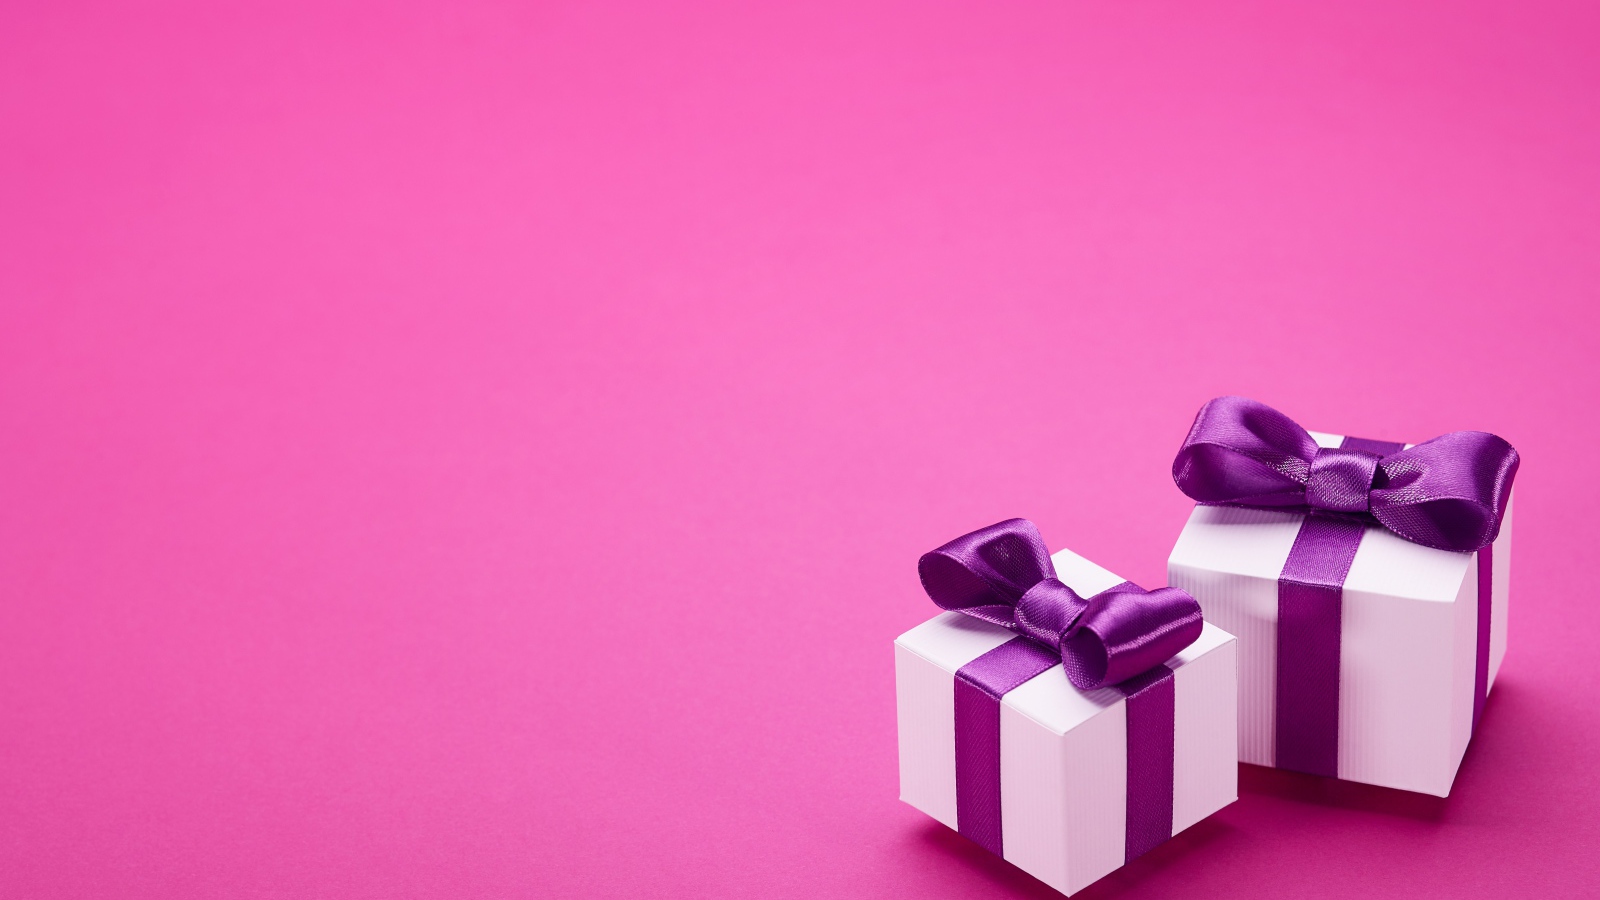 Два подарка с бантами на розовом фоне 